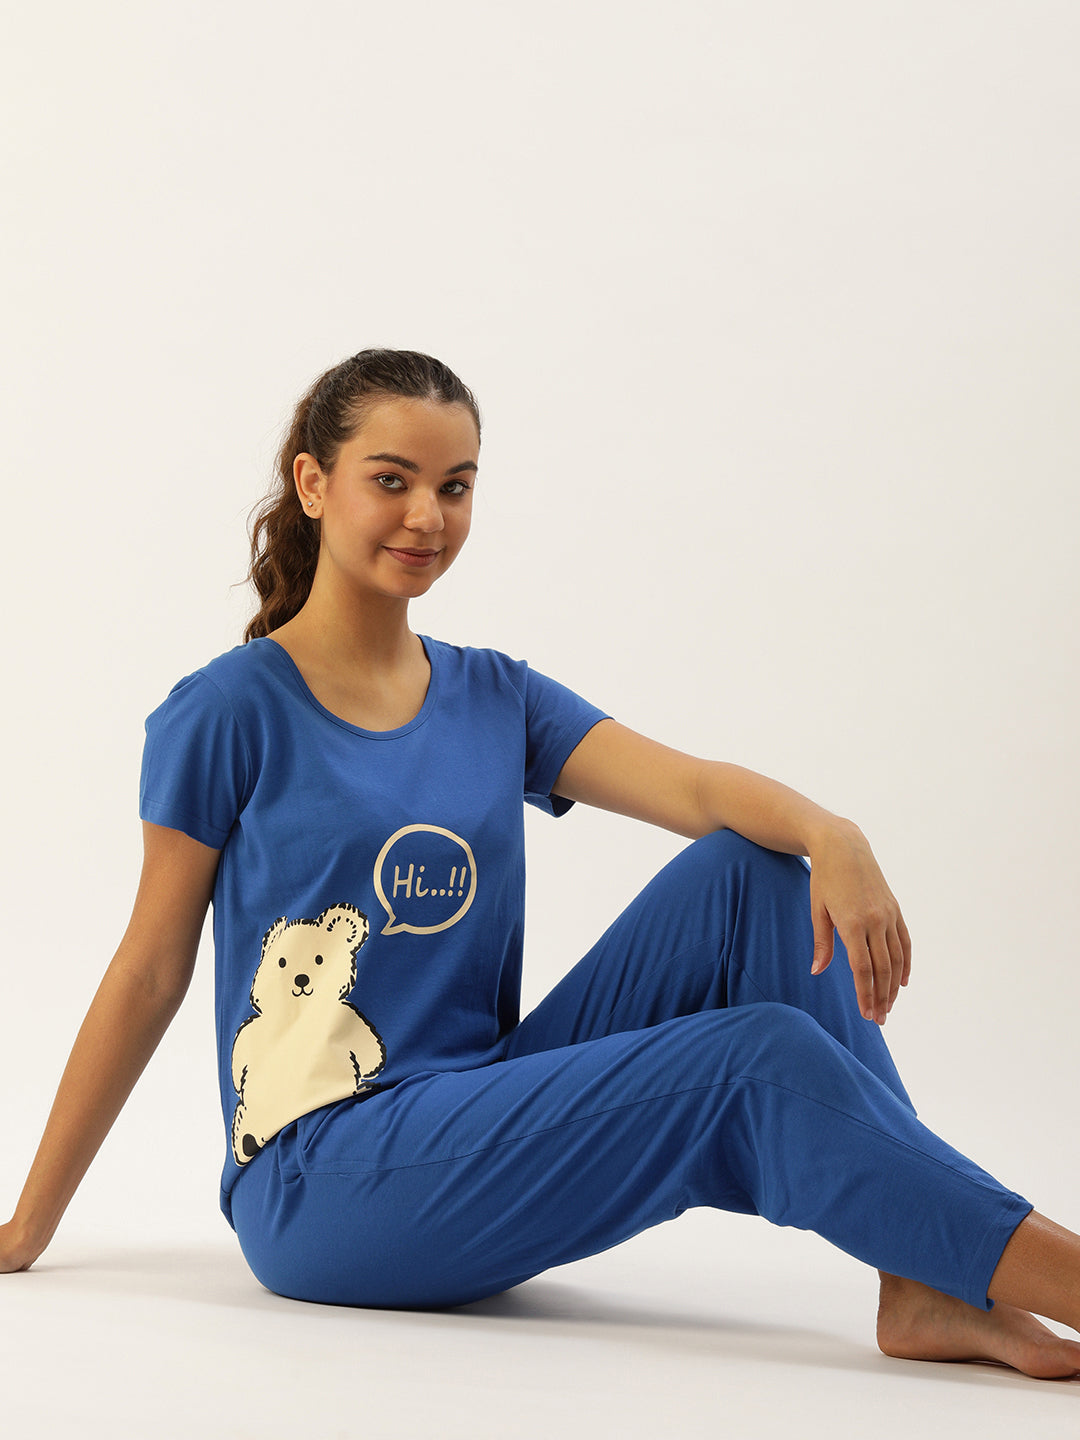 Cuddly Teddy Bear Printed Pyjama Set - 100% Cotton